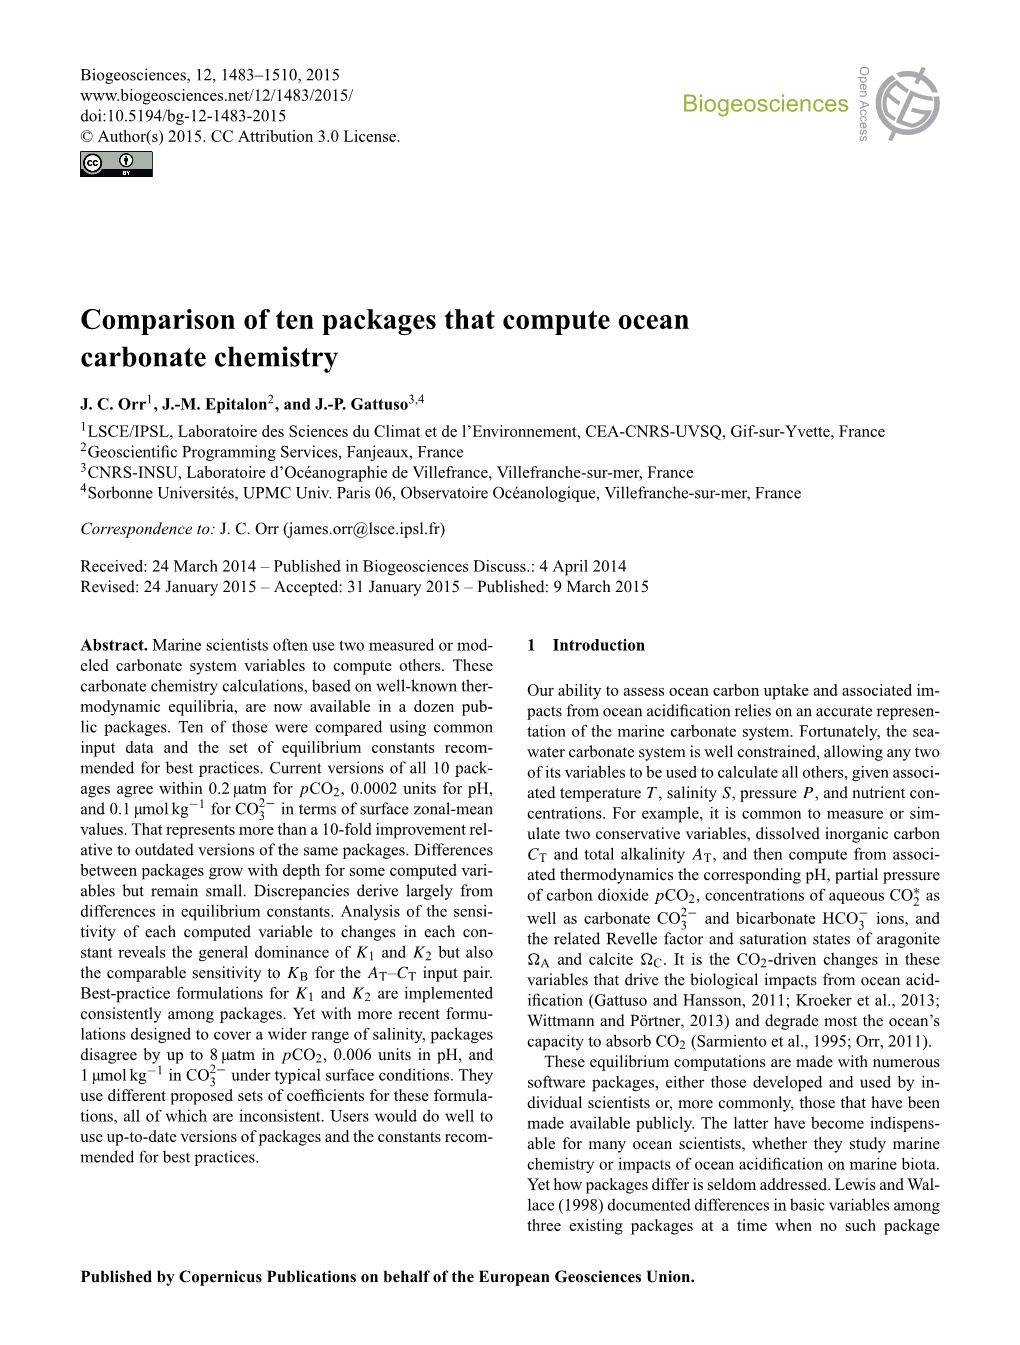 Comparison of Ten Packages That Compute Ocean Carbonate Chemistry